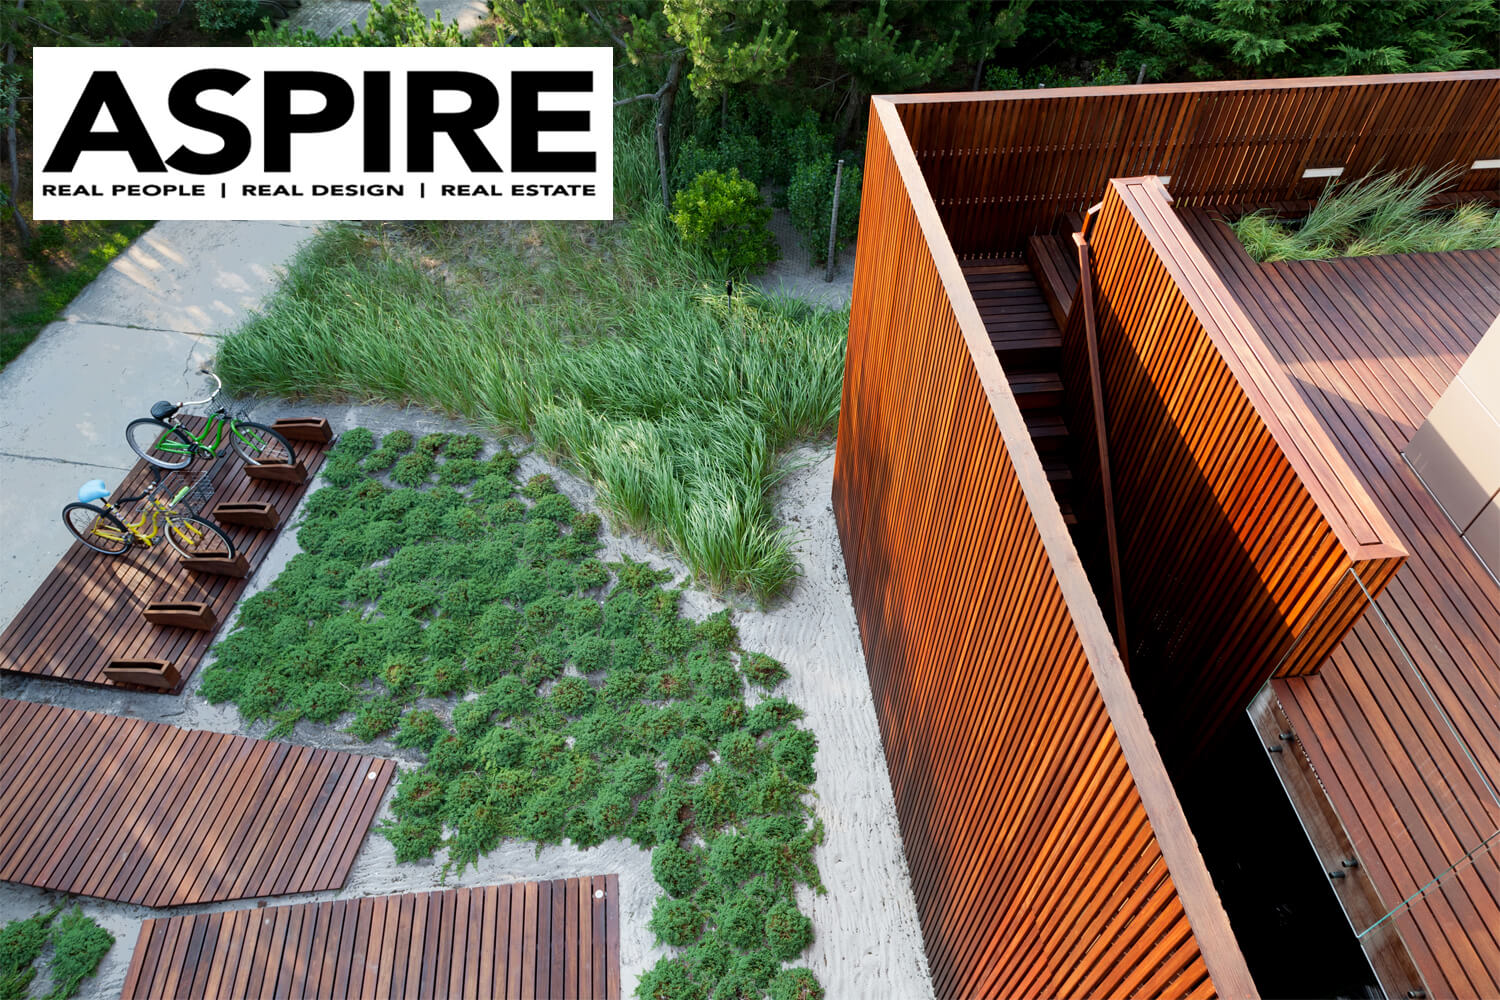 Aspire Home and Design Magazine